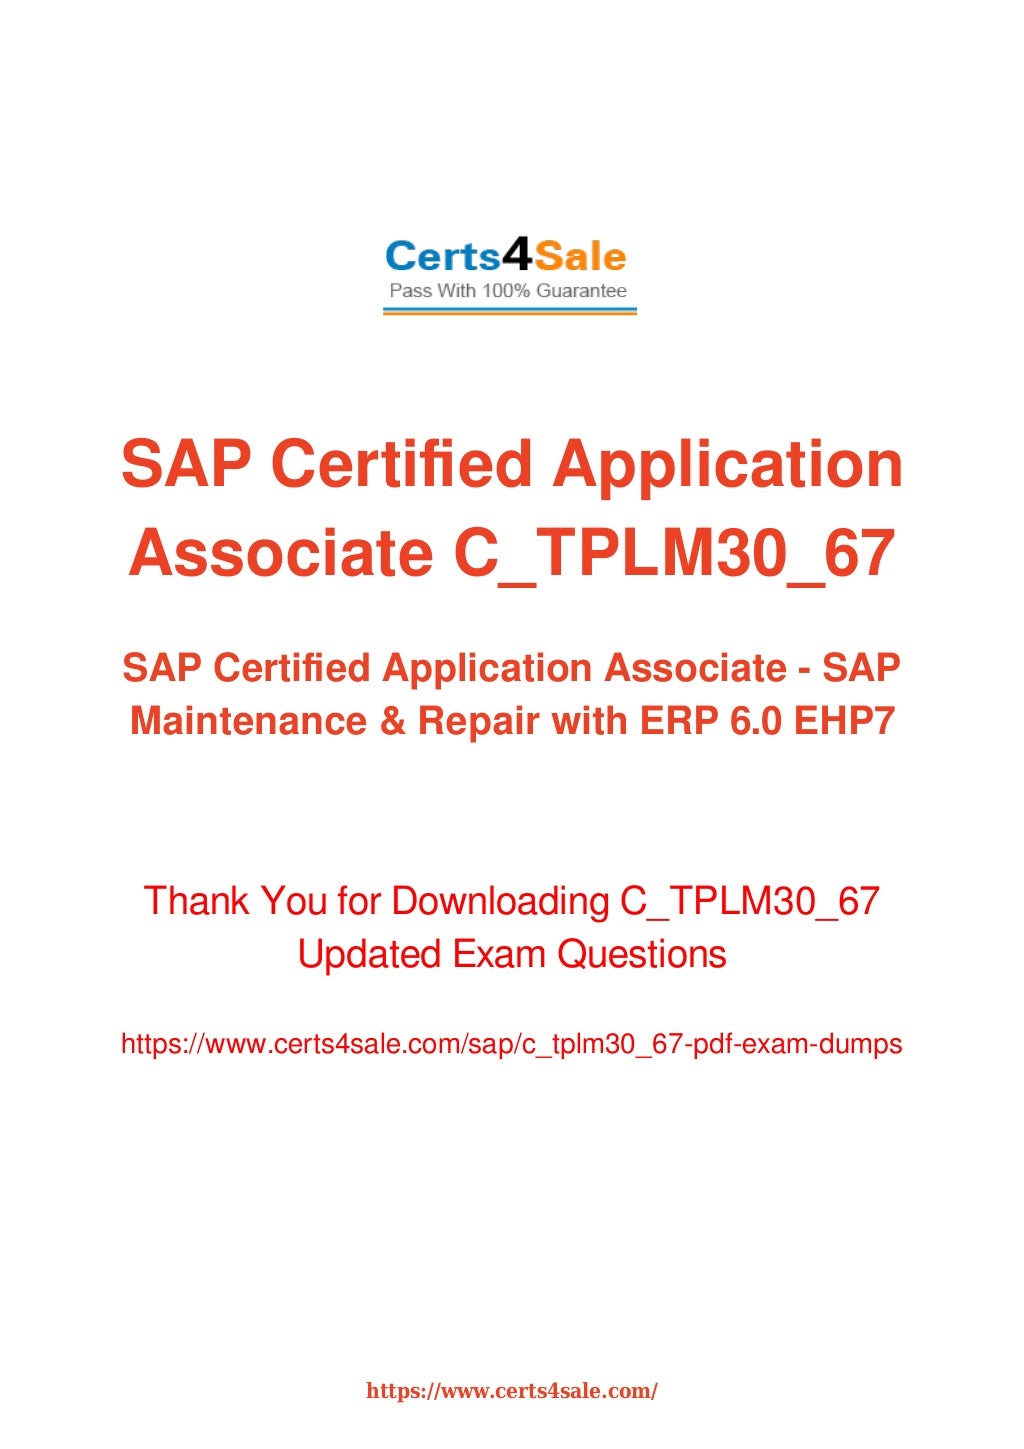 C-TPLM30-67 Latest Exam Discount